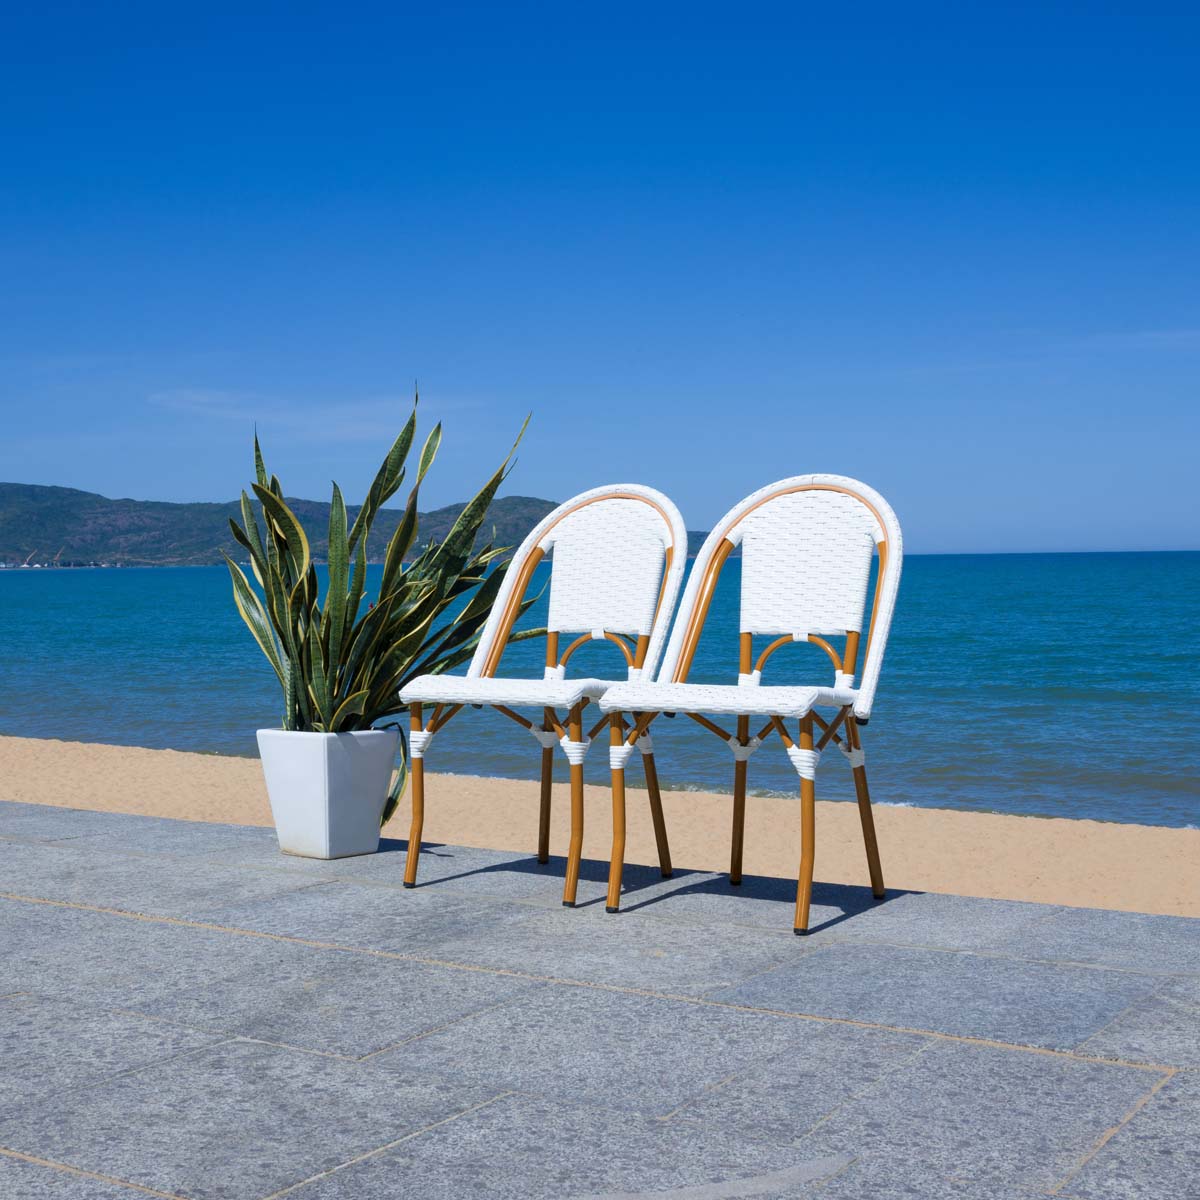 Safavieh California Side Chairs (Set of 2) , PAT7530